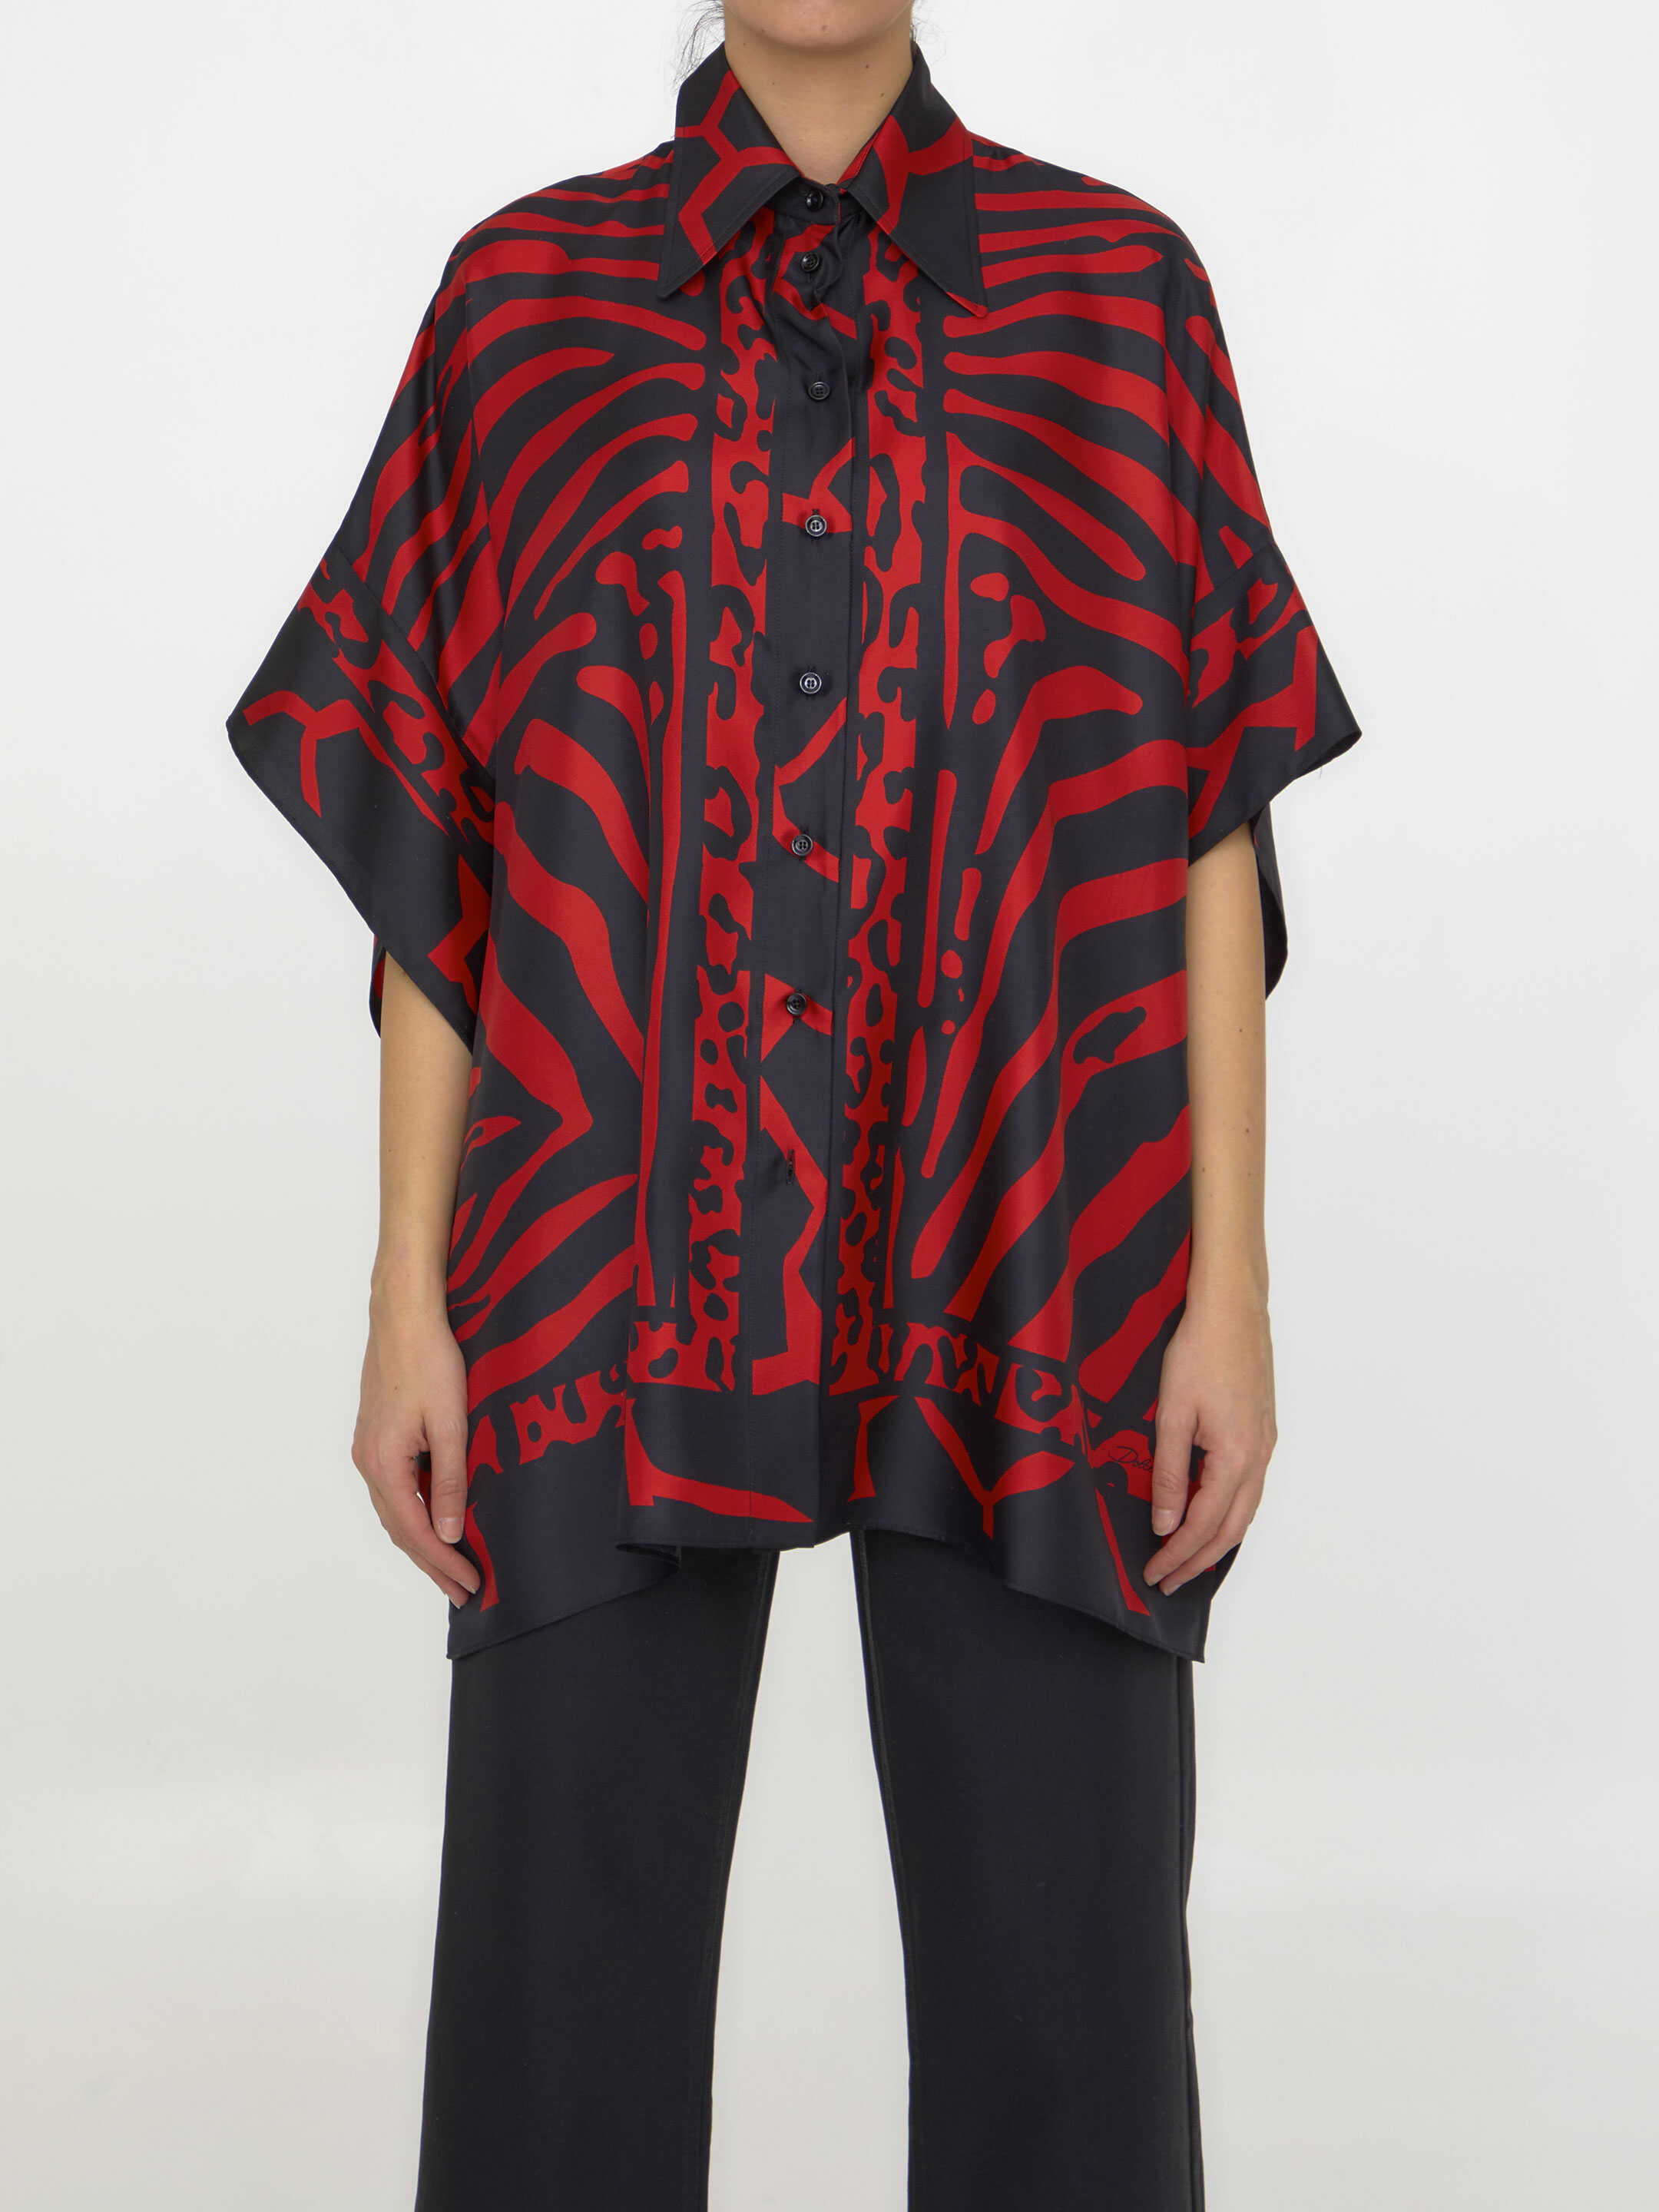 Poze Dolce & Gabbana Printed Twill Shirt Red b-mall.ro 